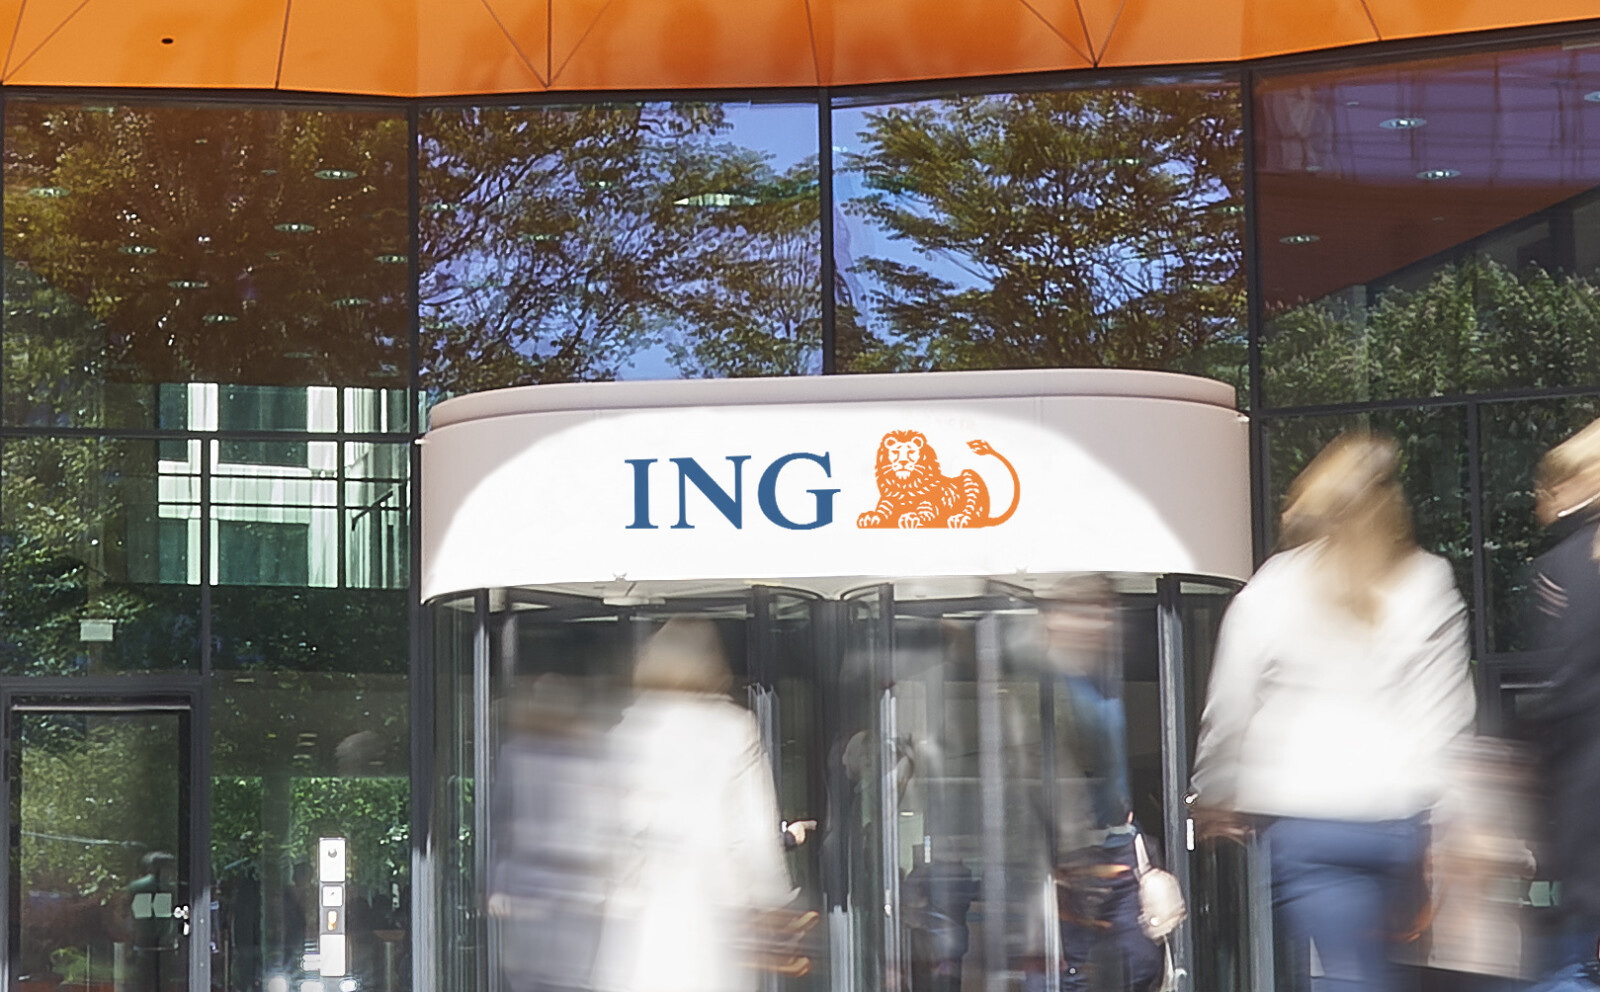 ING-Die-Bank-warnt-vor-Smishing